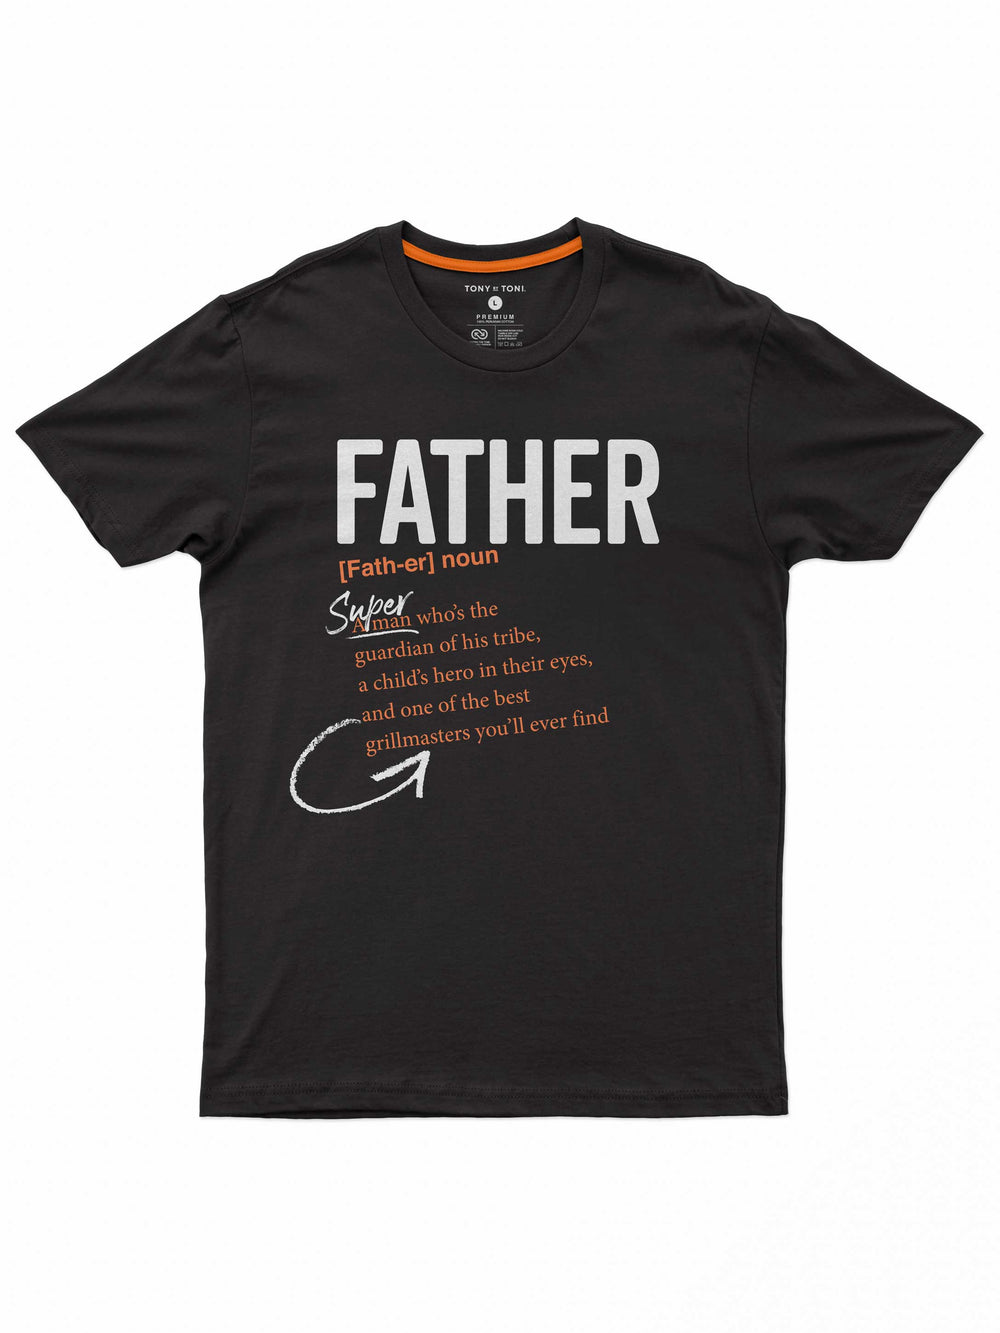 Father logo 2.0 matching family t-shirt